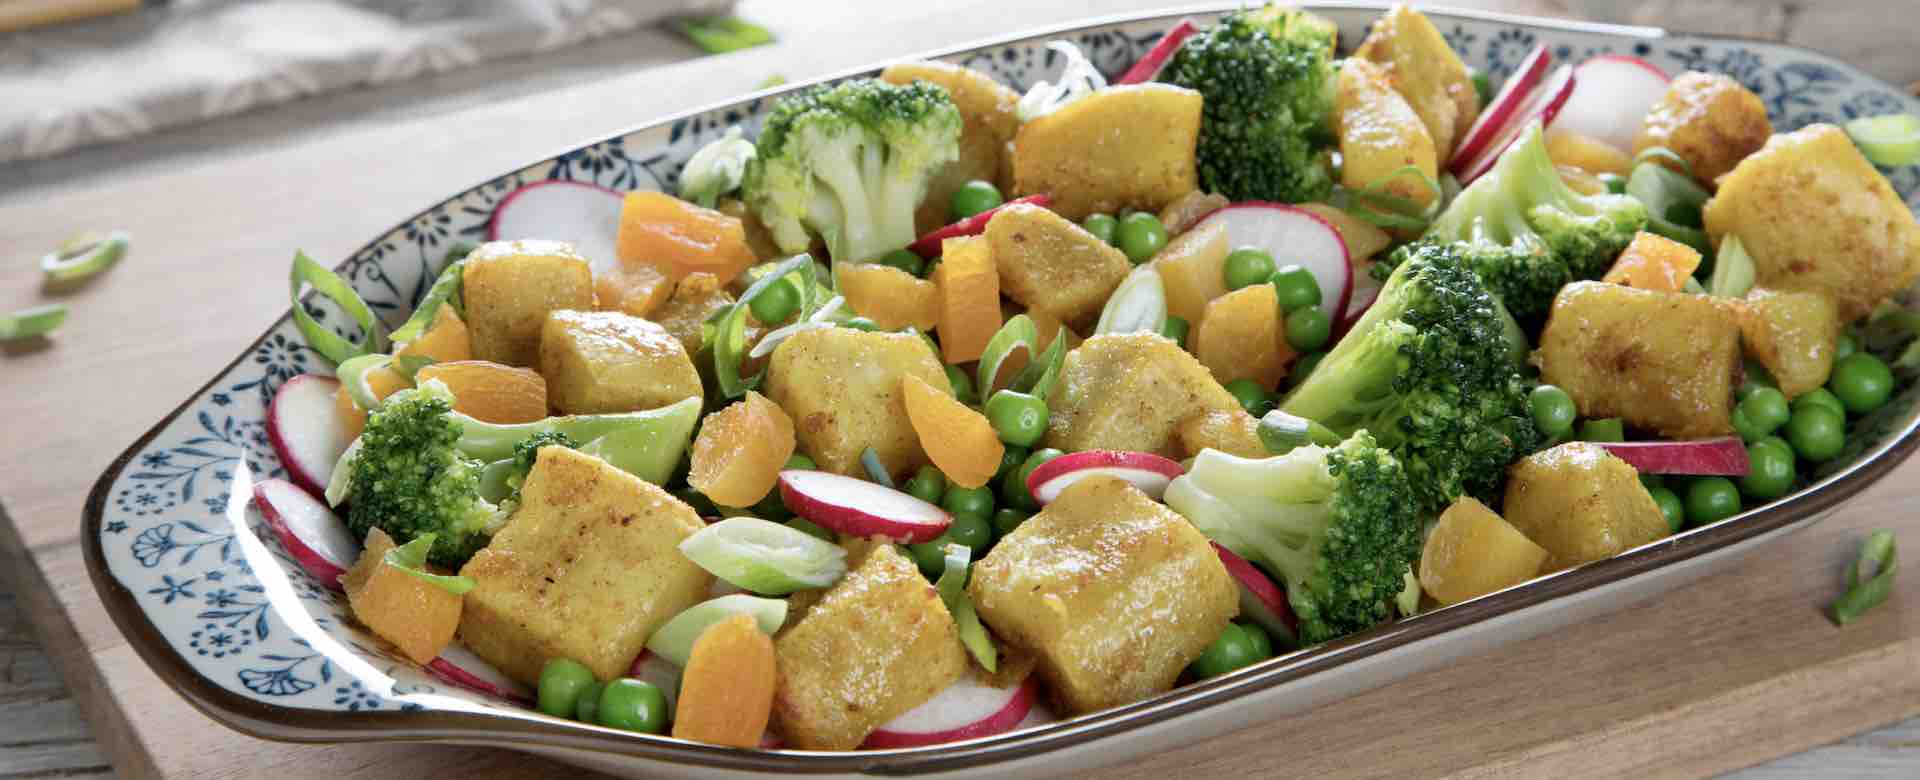 Curried Sweet Potato, Pea And Broccoli Salad